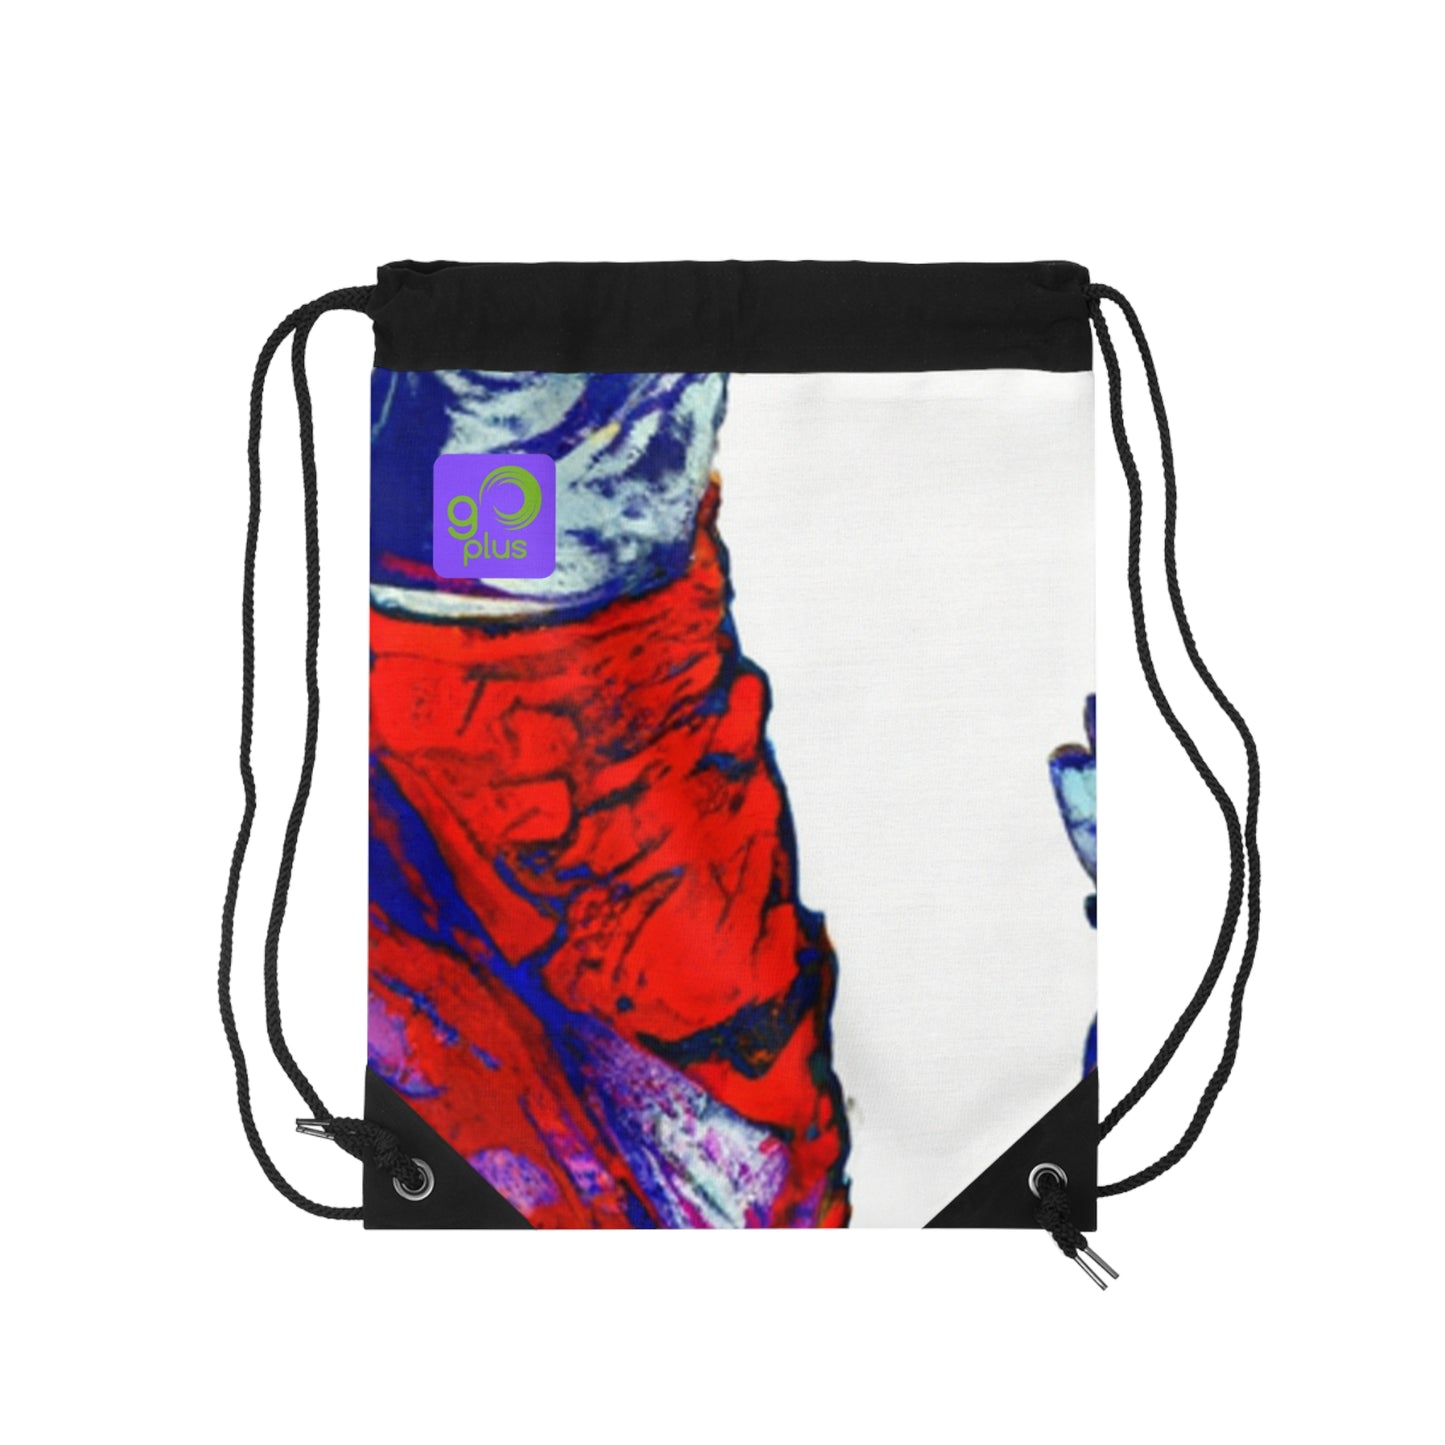 "Momentous Motion: A Sports Art Fusion" - Go Plus Drawstring Bag